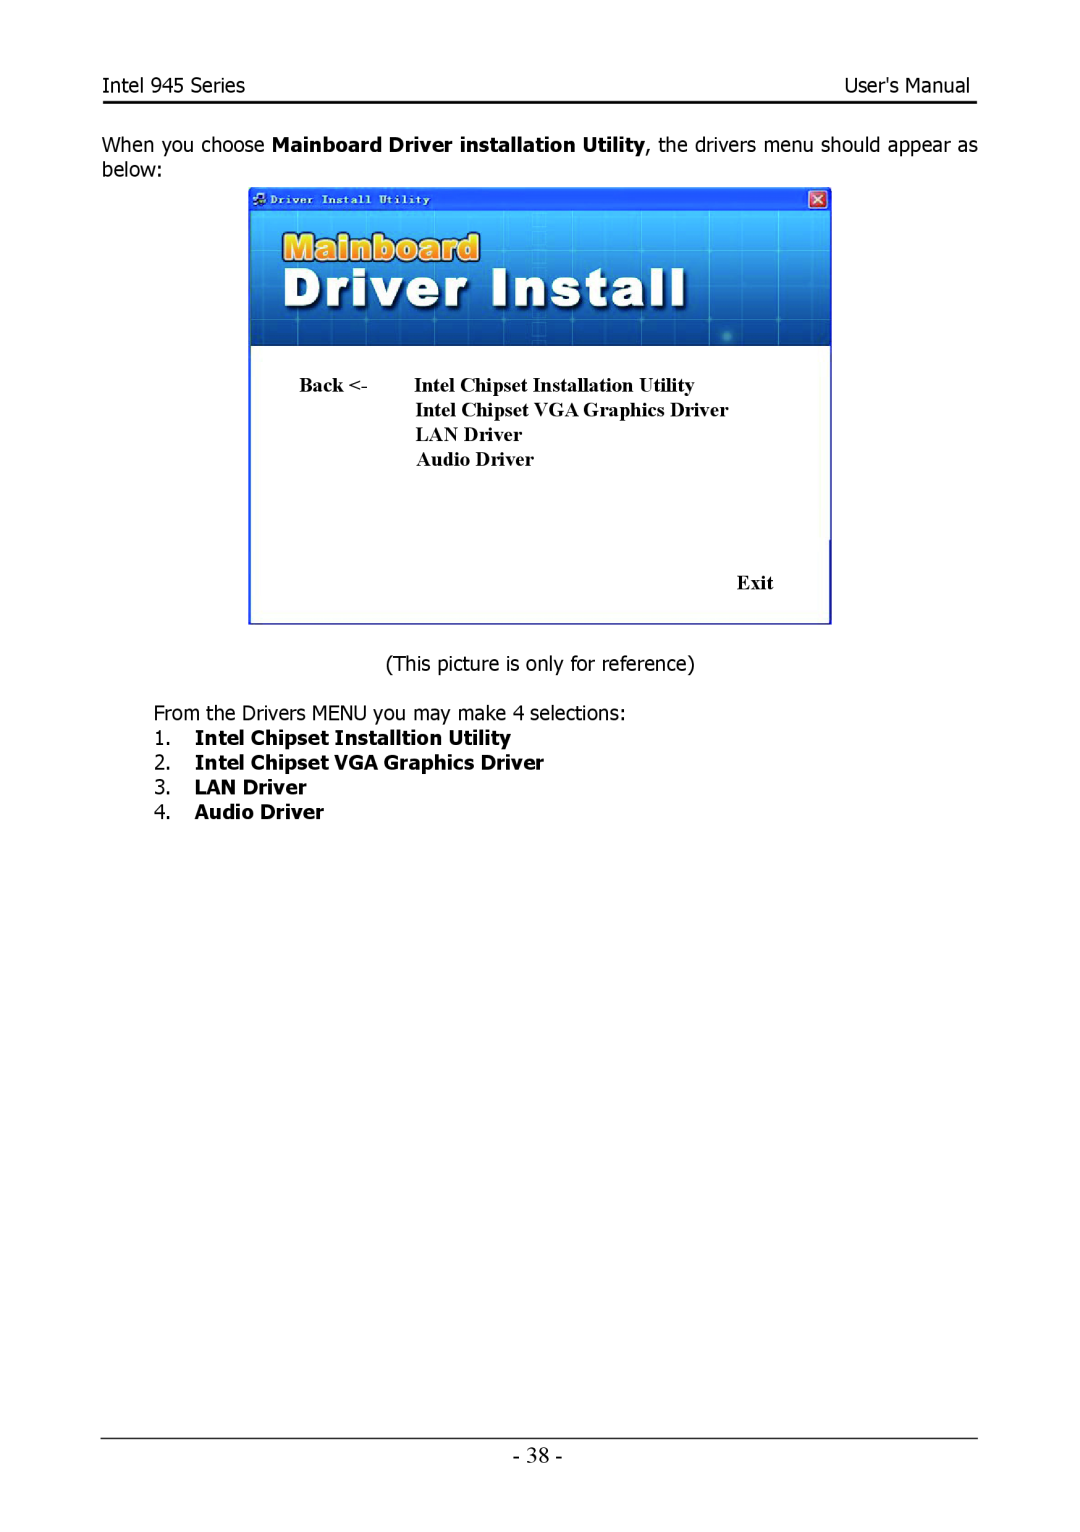 Intel 945GCT Back - Intel Chipset Installation Utility, Intel Chipset VGA Graphics Driver LAN Driver Audio Driver Exit 